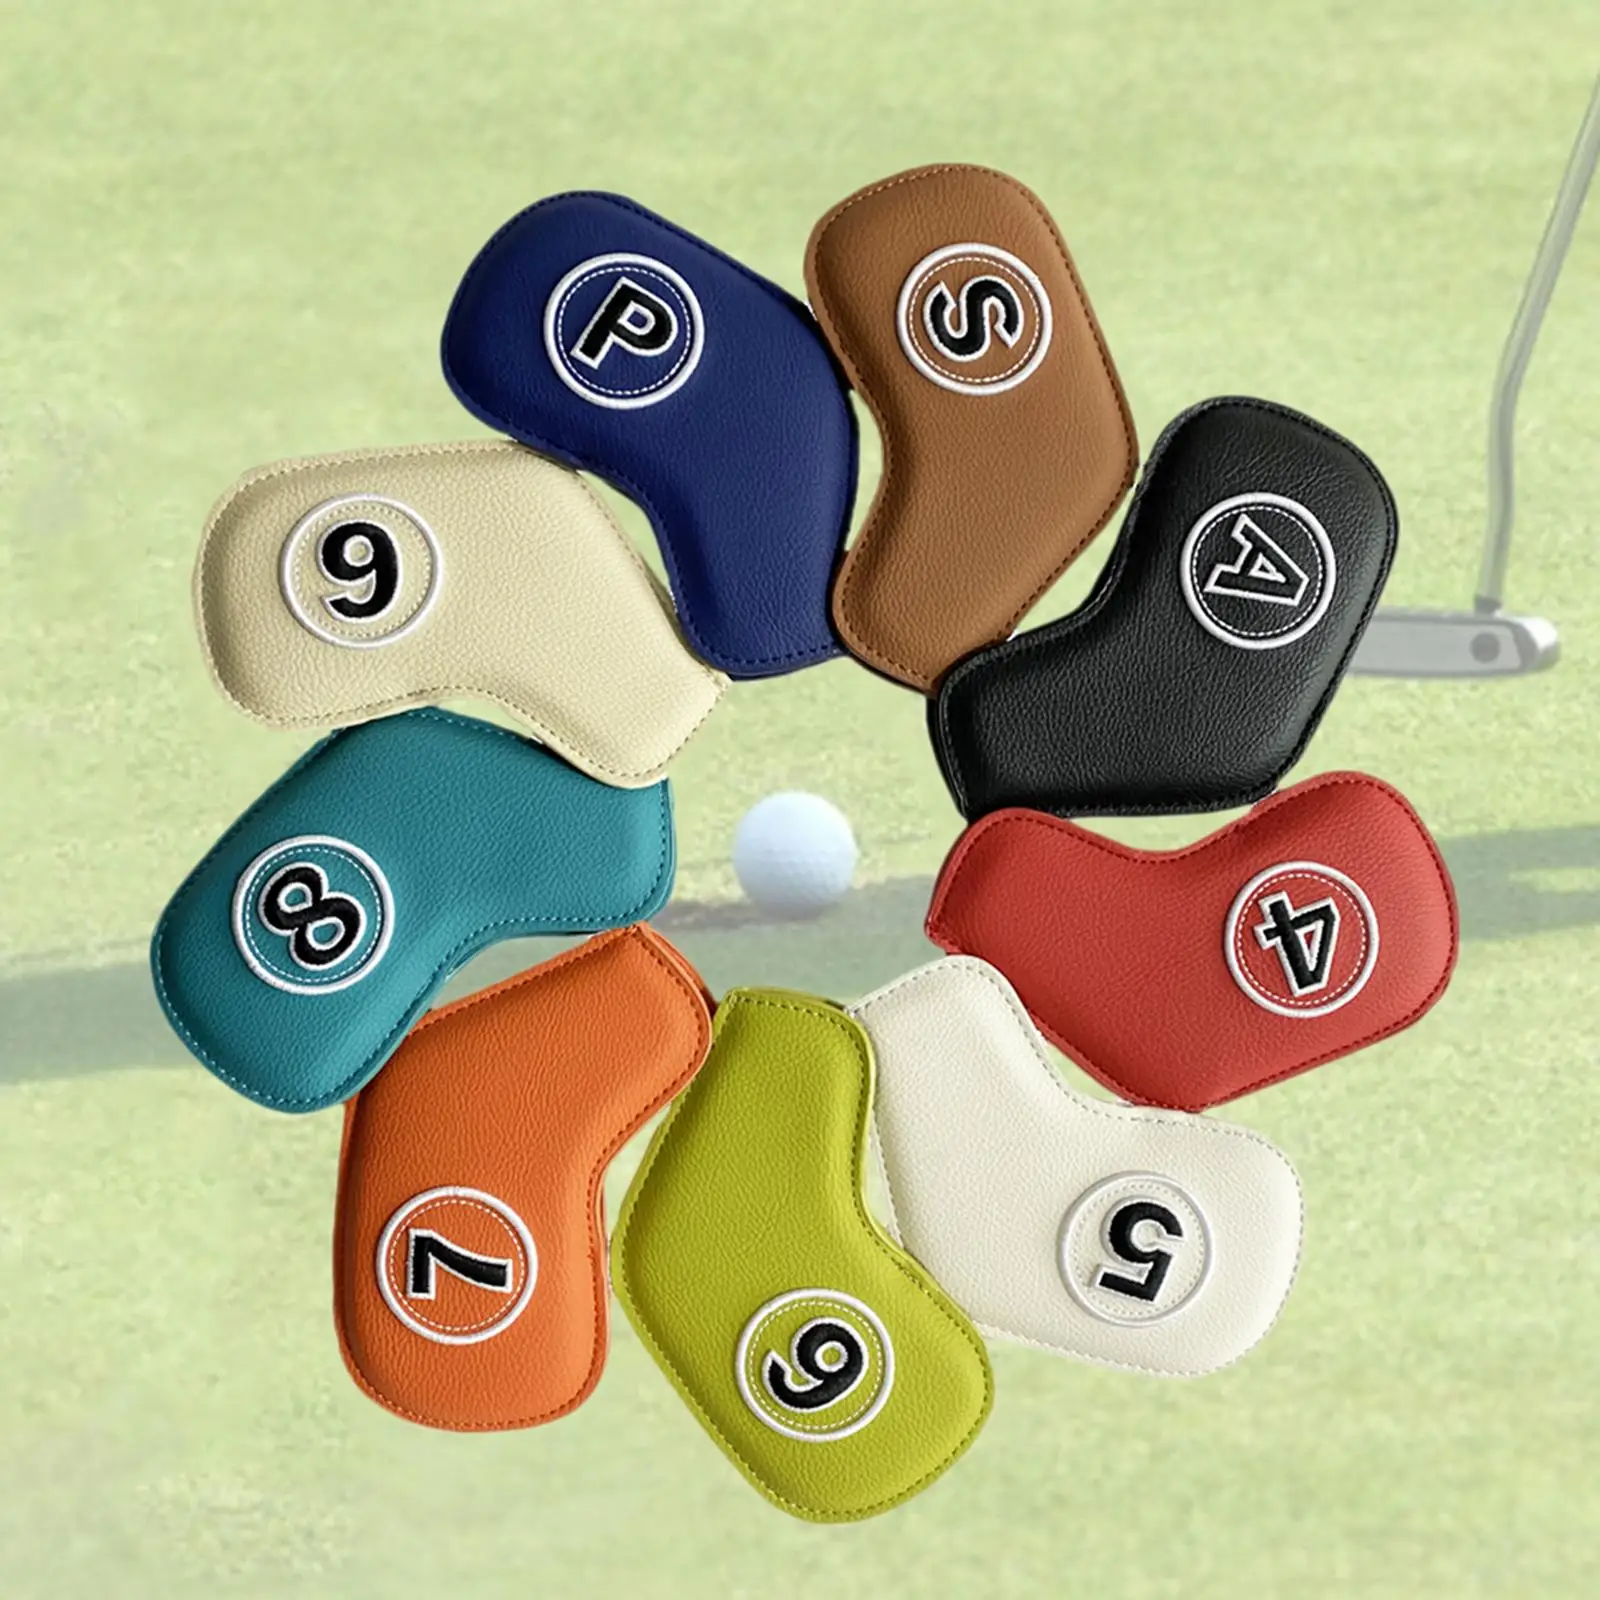 9x Golf Irons Head Covers Set Golf Club Head Cover Protector Waterproof Golfer Equipment